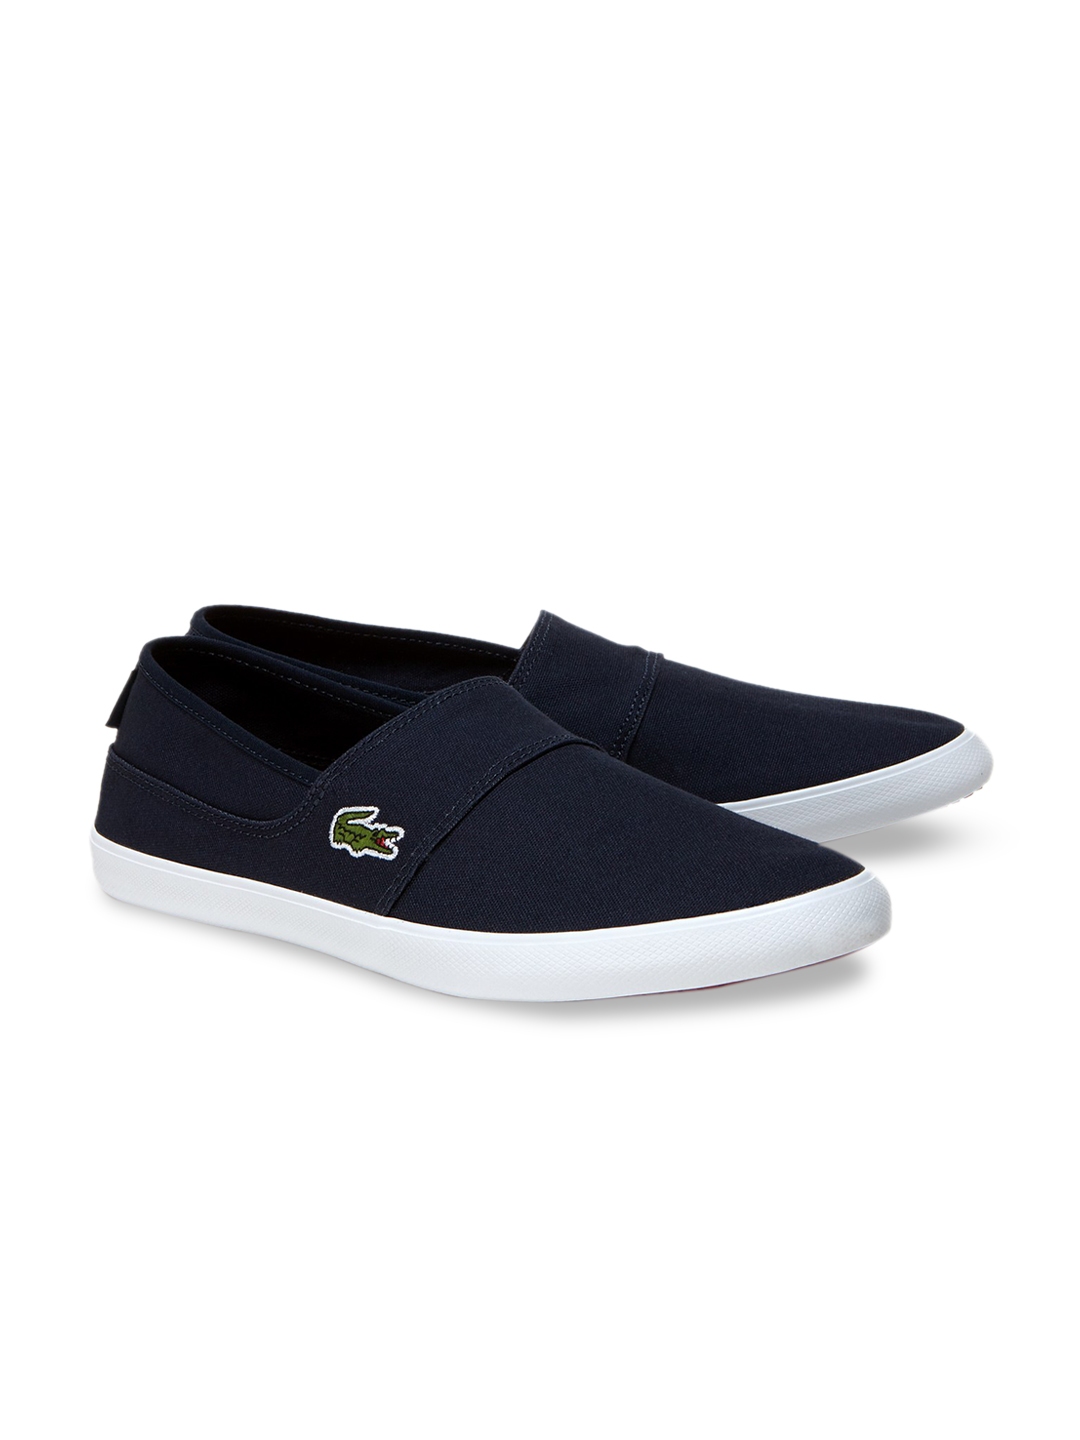 Buy Lacoste Men Navy Blue Slip On Sneakers - Casual Shoes for Men ...